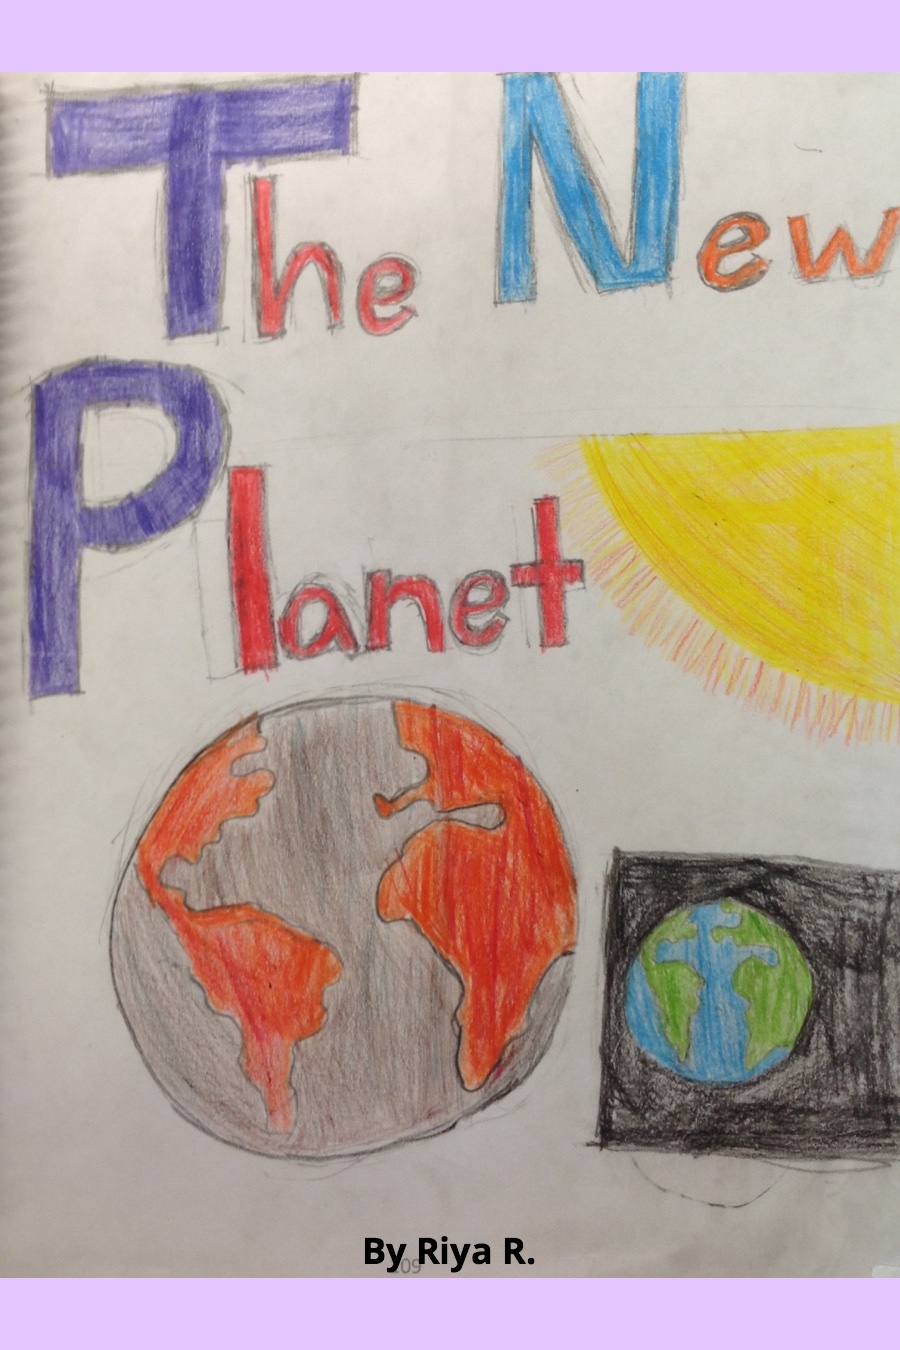 The New Planet written by Riya R